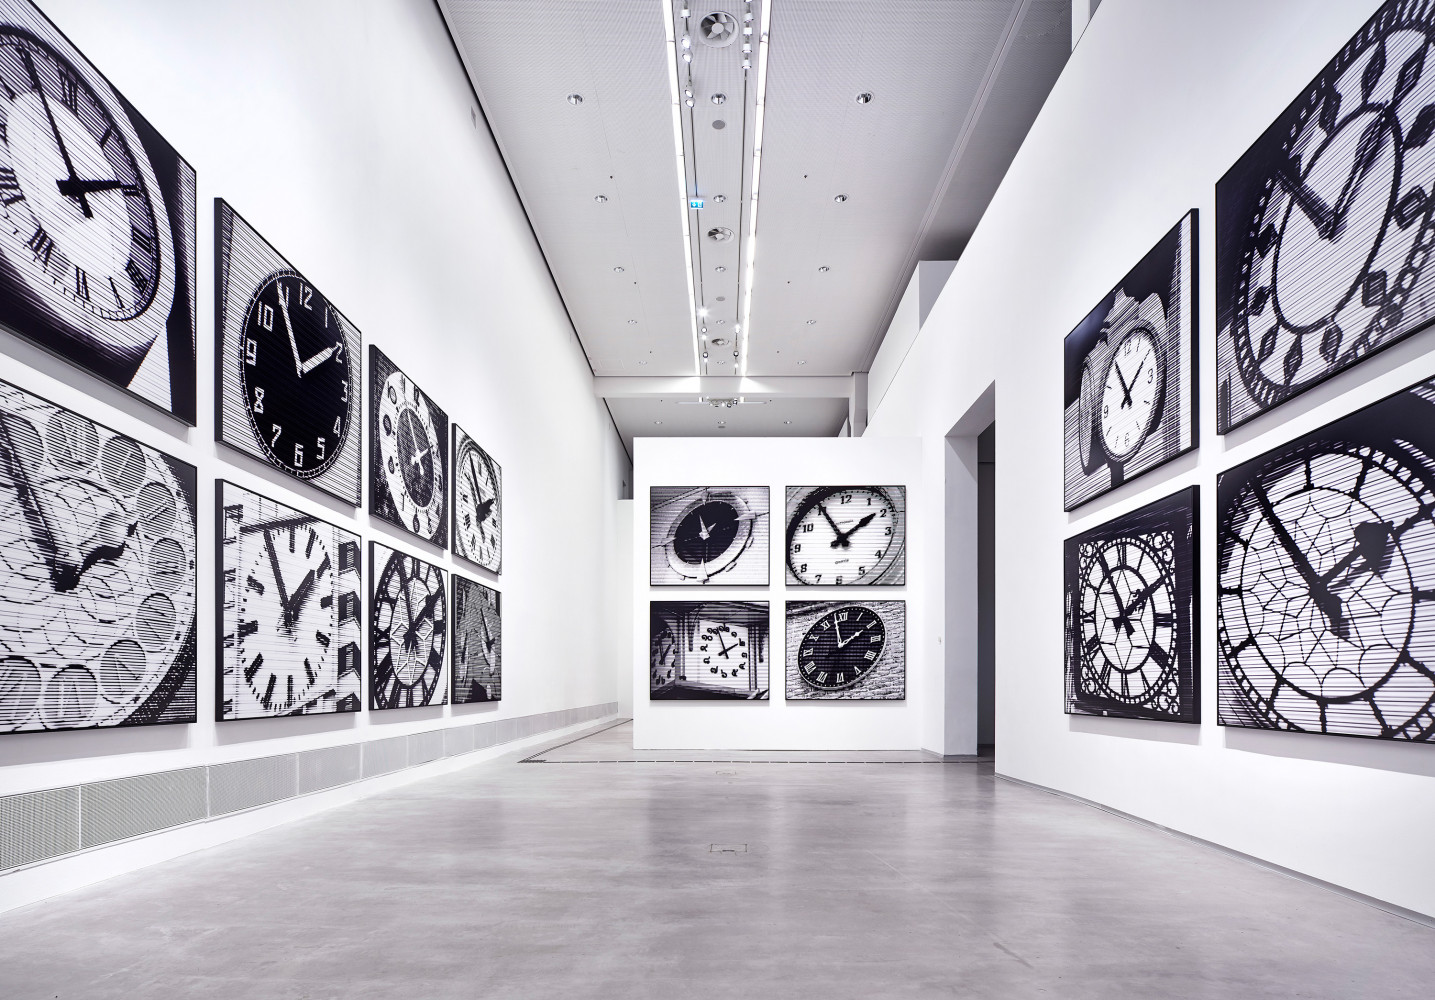 Bettina Pousttchi, ‘In Recent Years, Berlinische Galerie – Museum for Modern Art Berlin’, Installation view, 2019